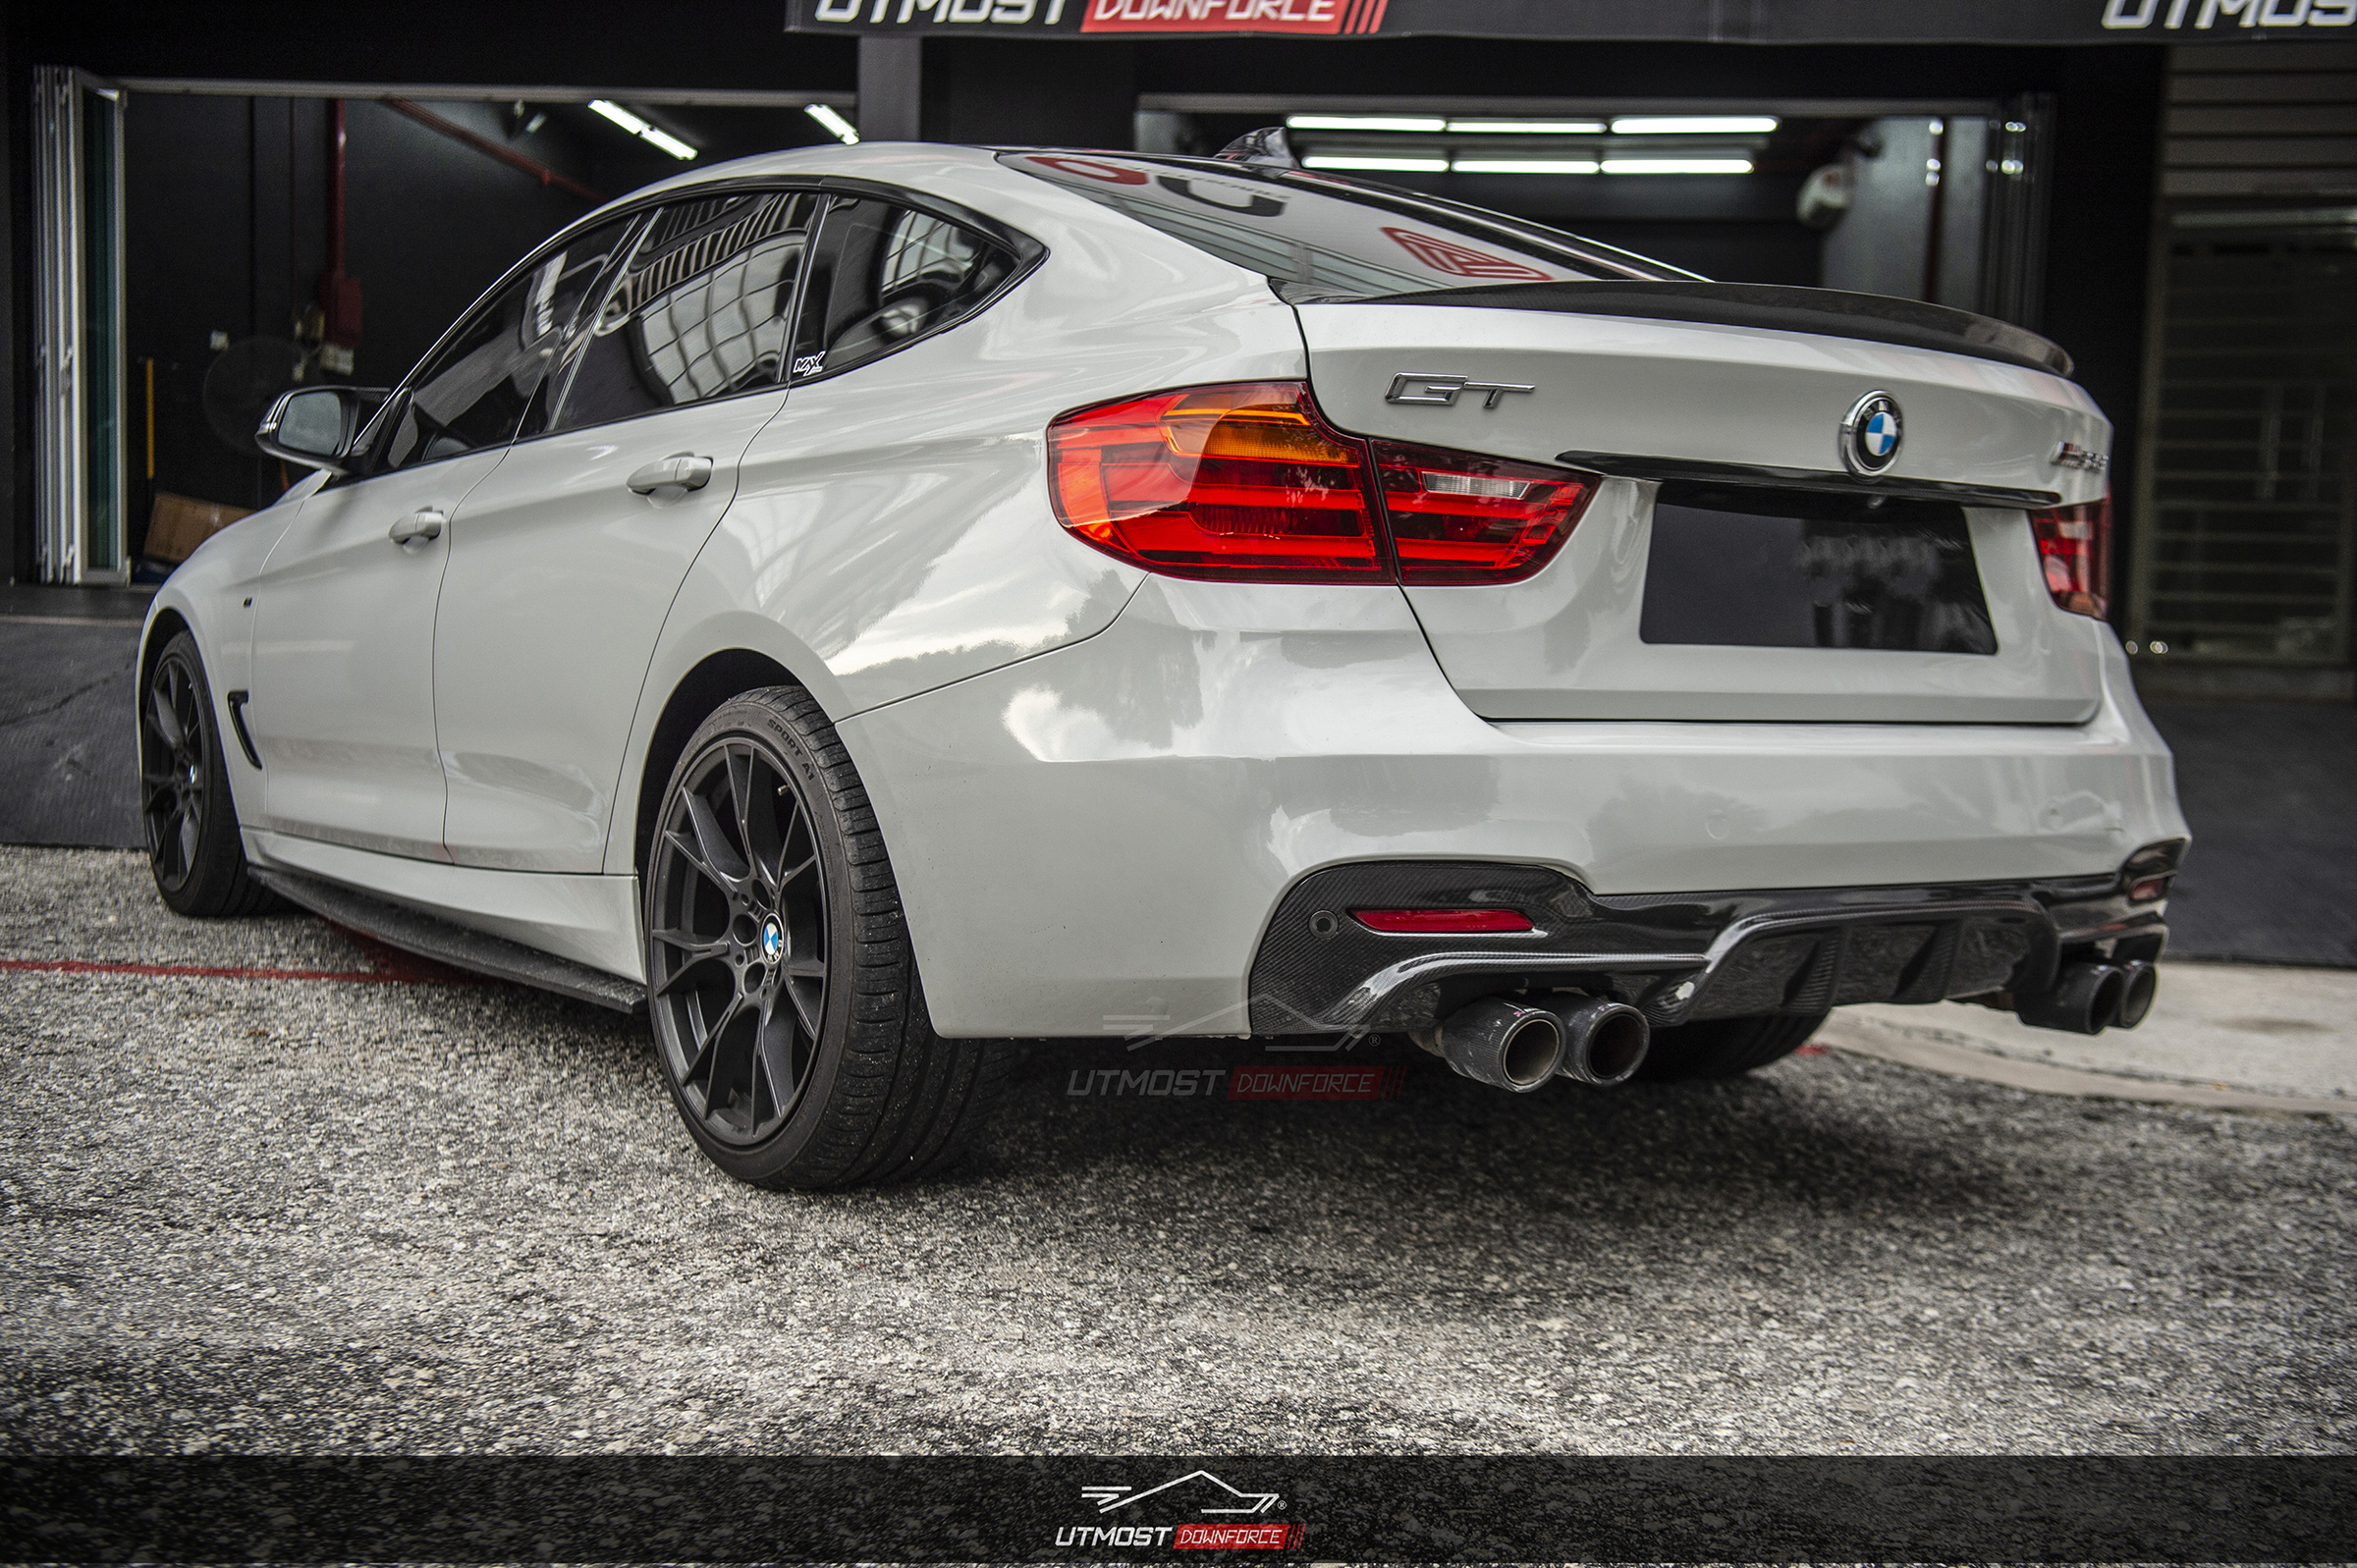 BMW F – Utmost Downforce Garage